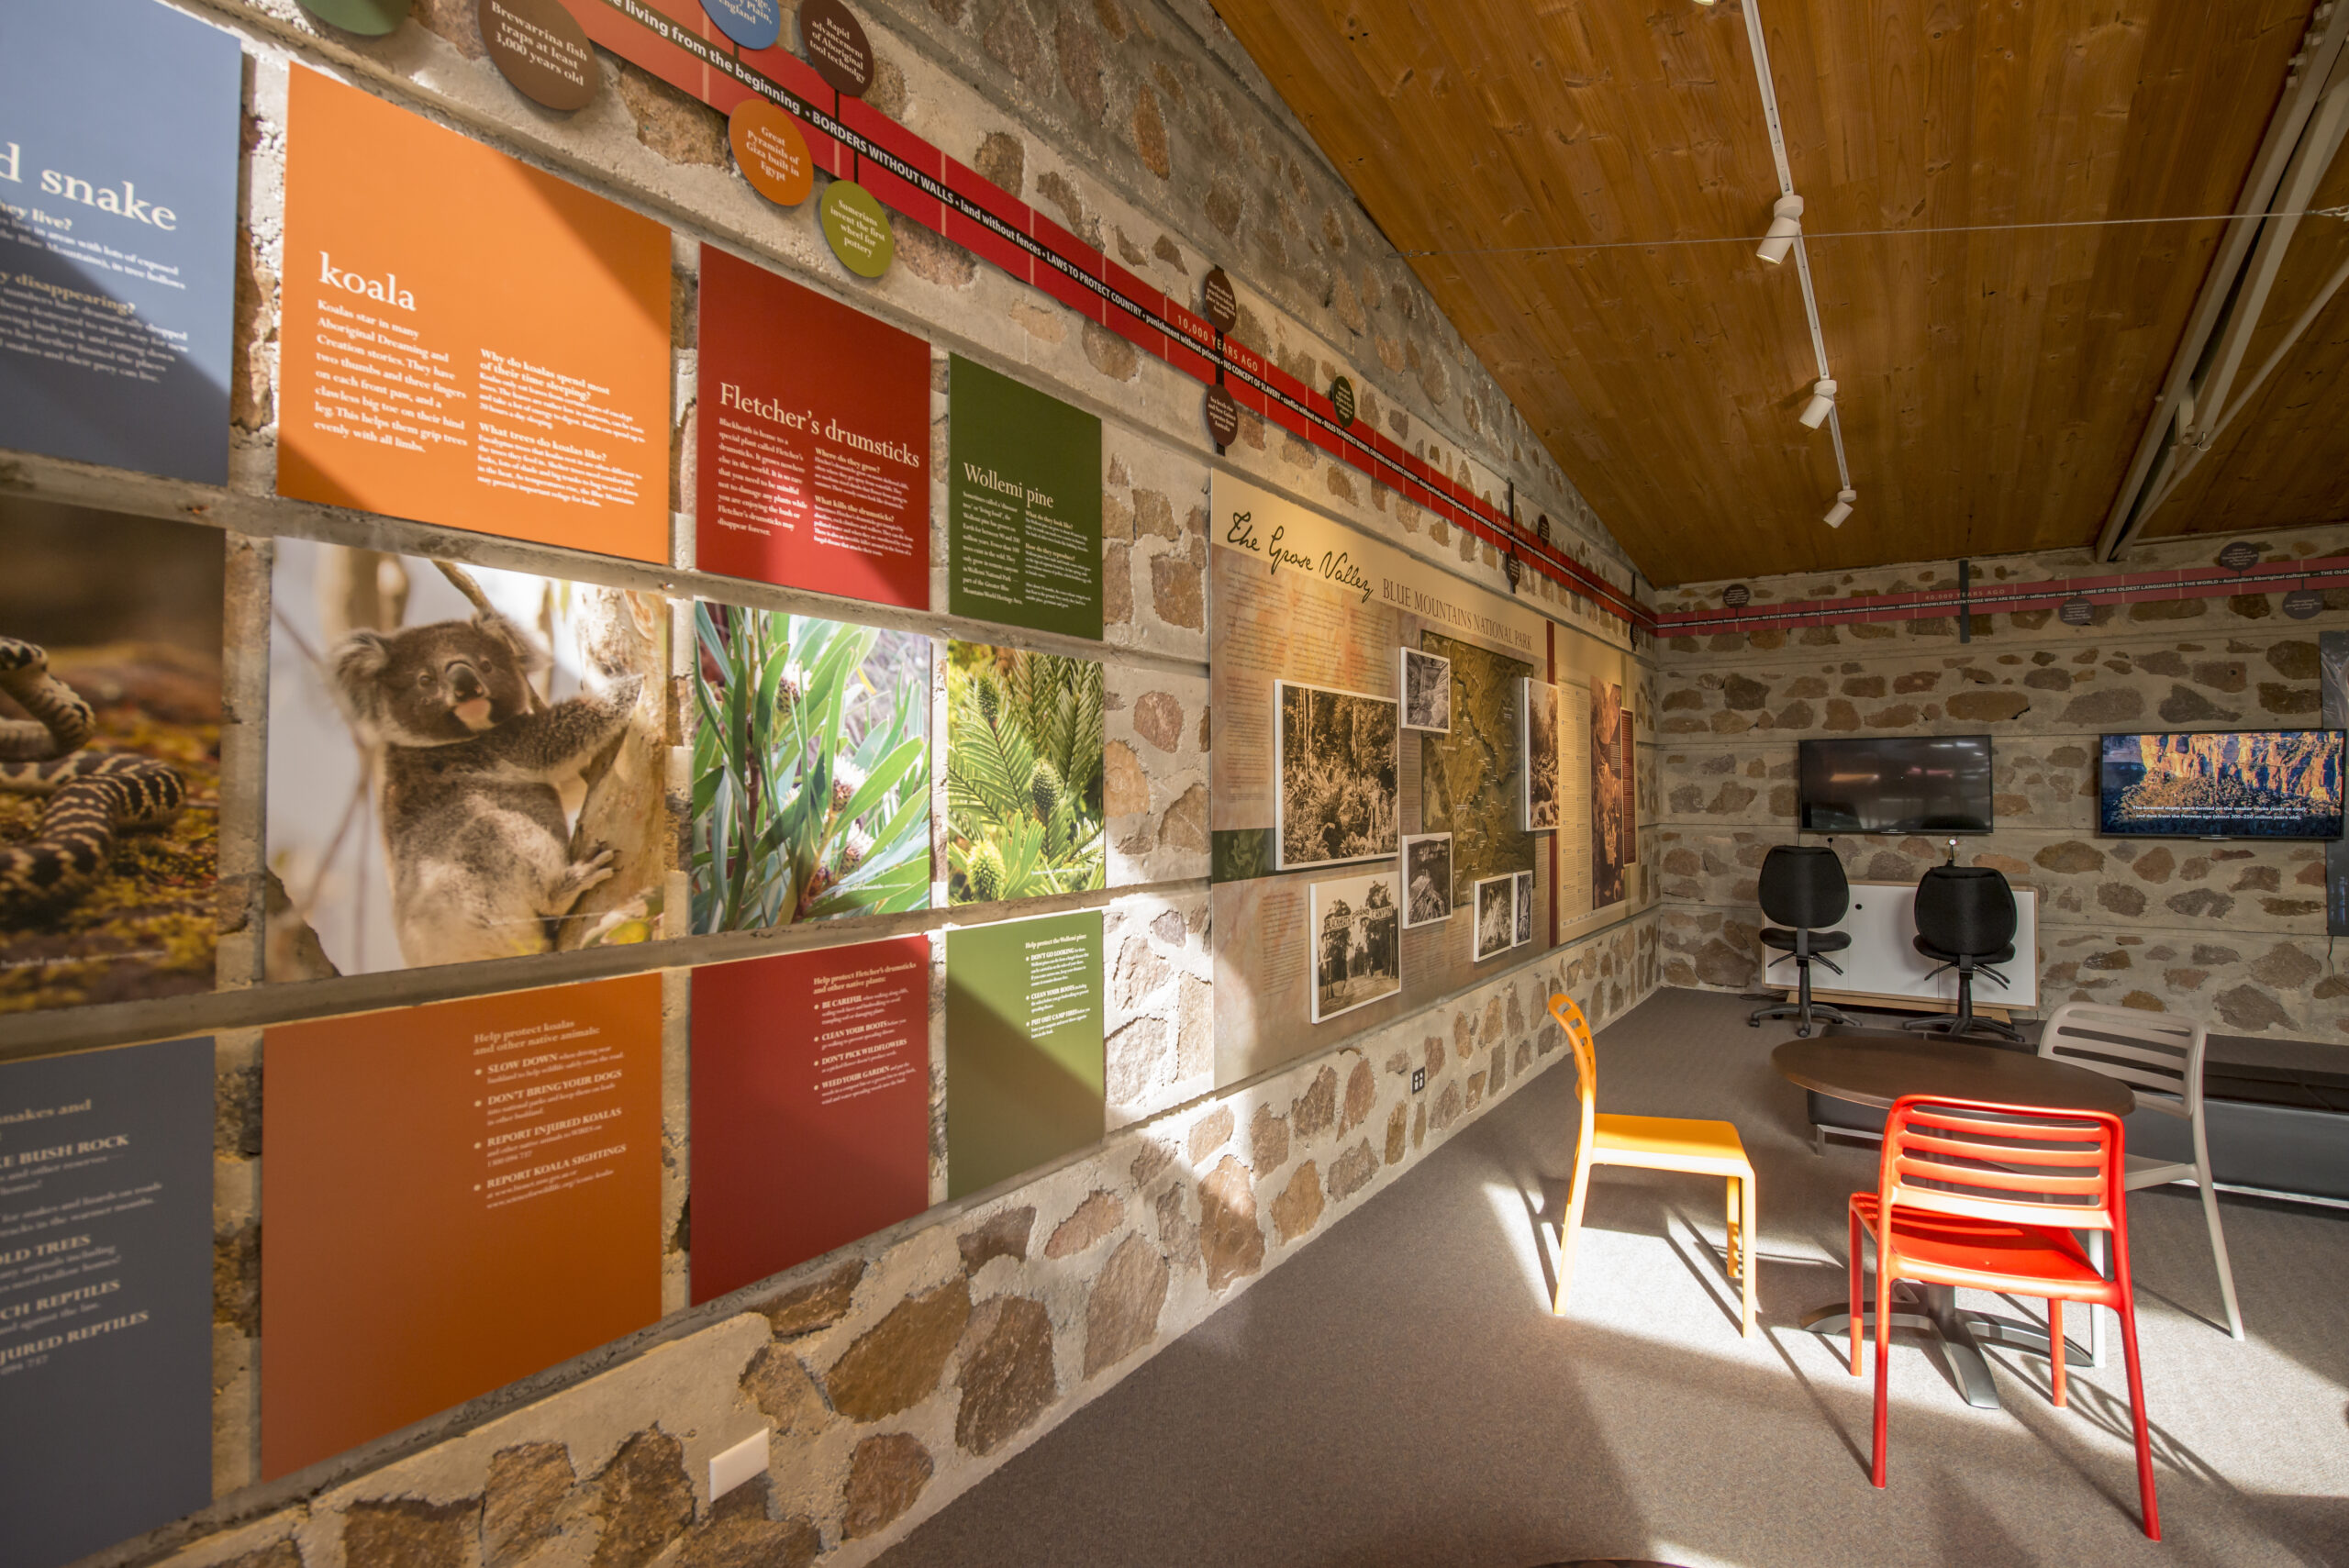 Blue Mountains Heritage Centre indoors. Photo credit: John Spencer / DPE